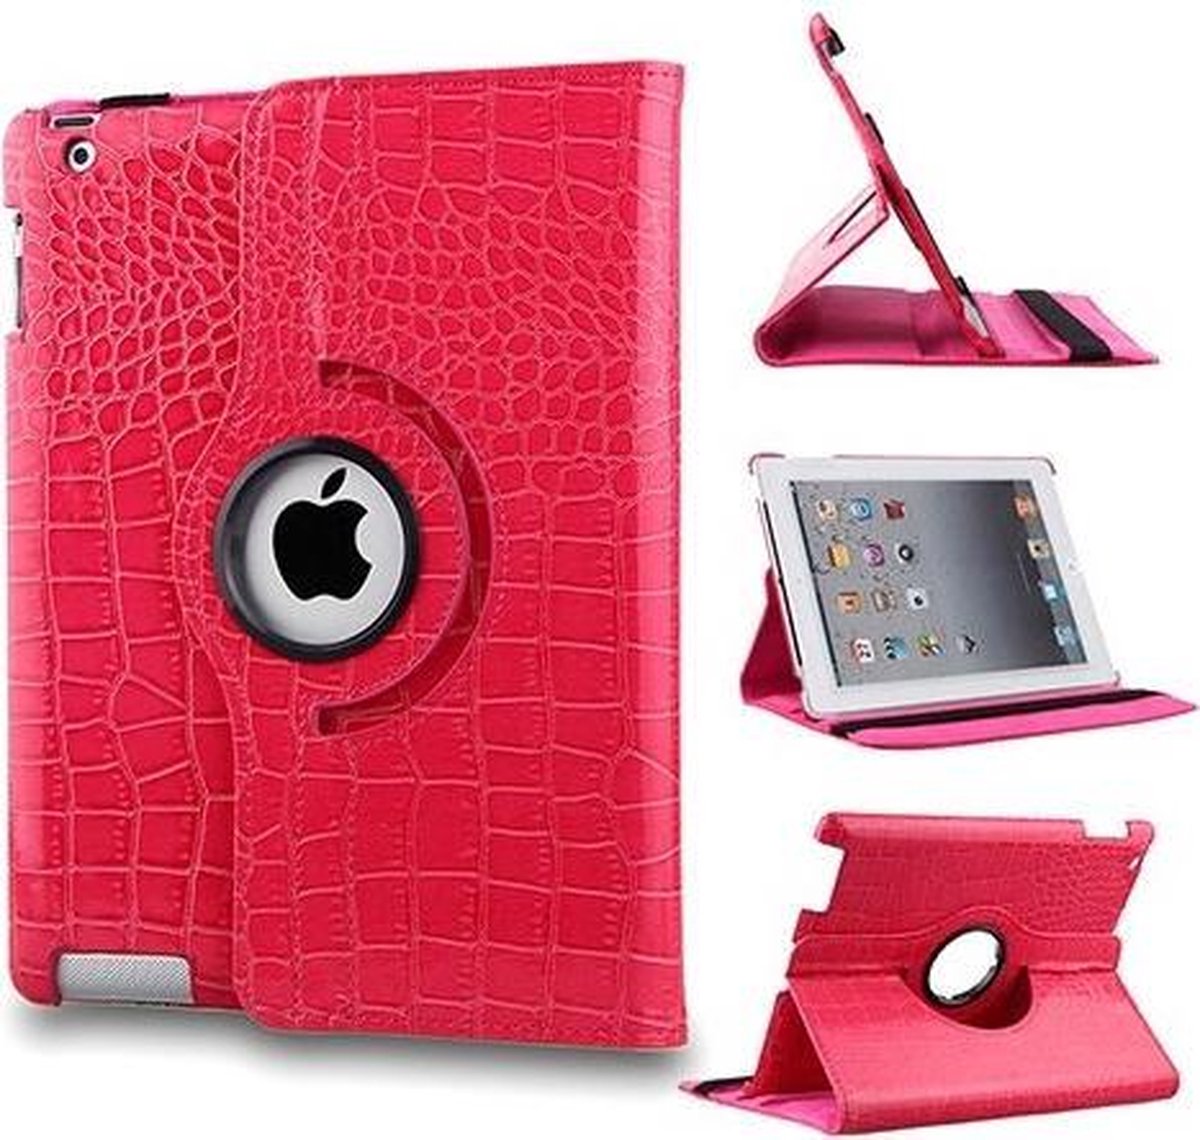 iPad 2, 3, 4 - 360 Graden draaibare Hoes - krokodillen / Crocodile Lederen - Roze